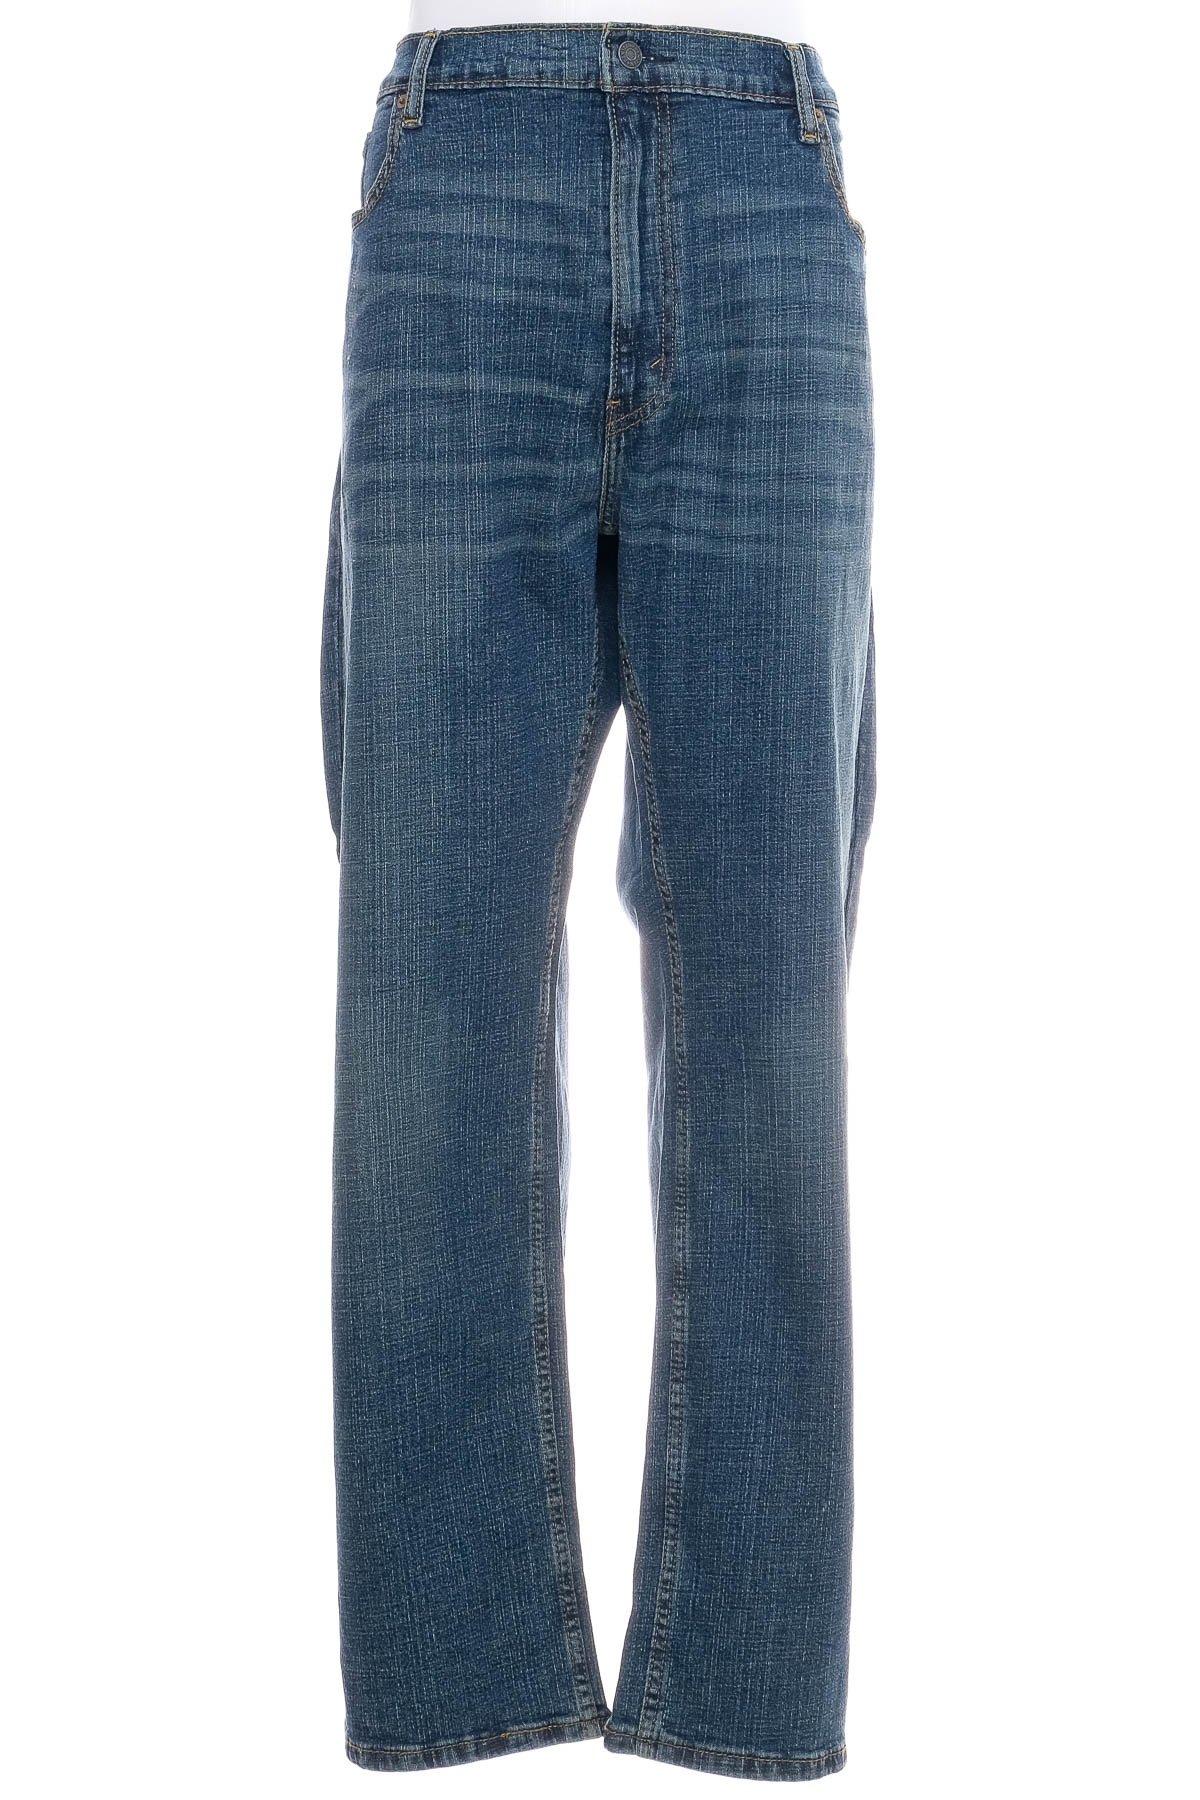 Jeans pentru bărbăți - DENIZEN FROM LEVI'S - 0